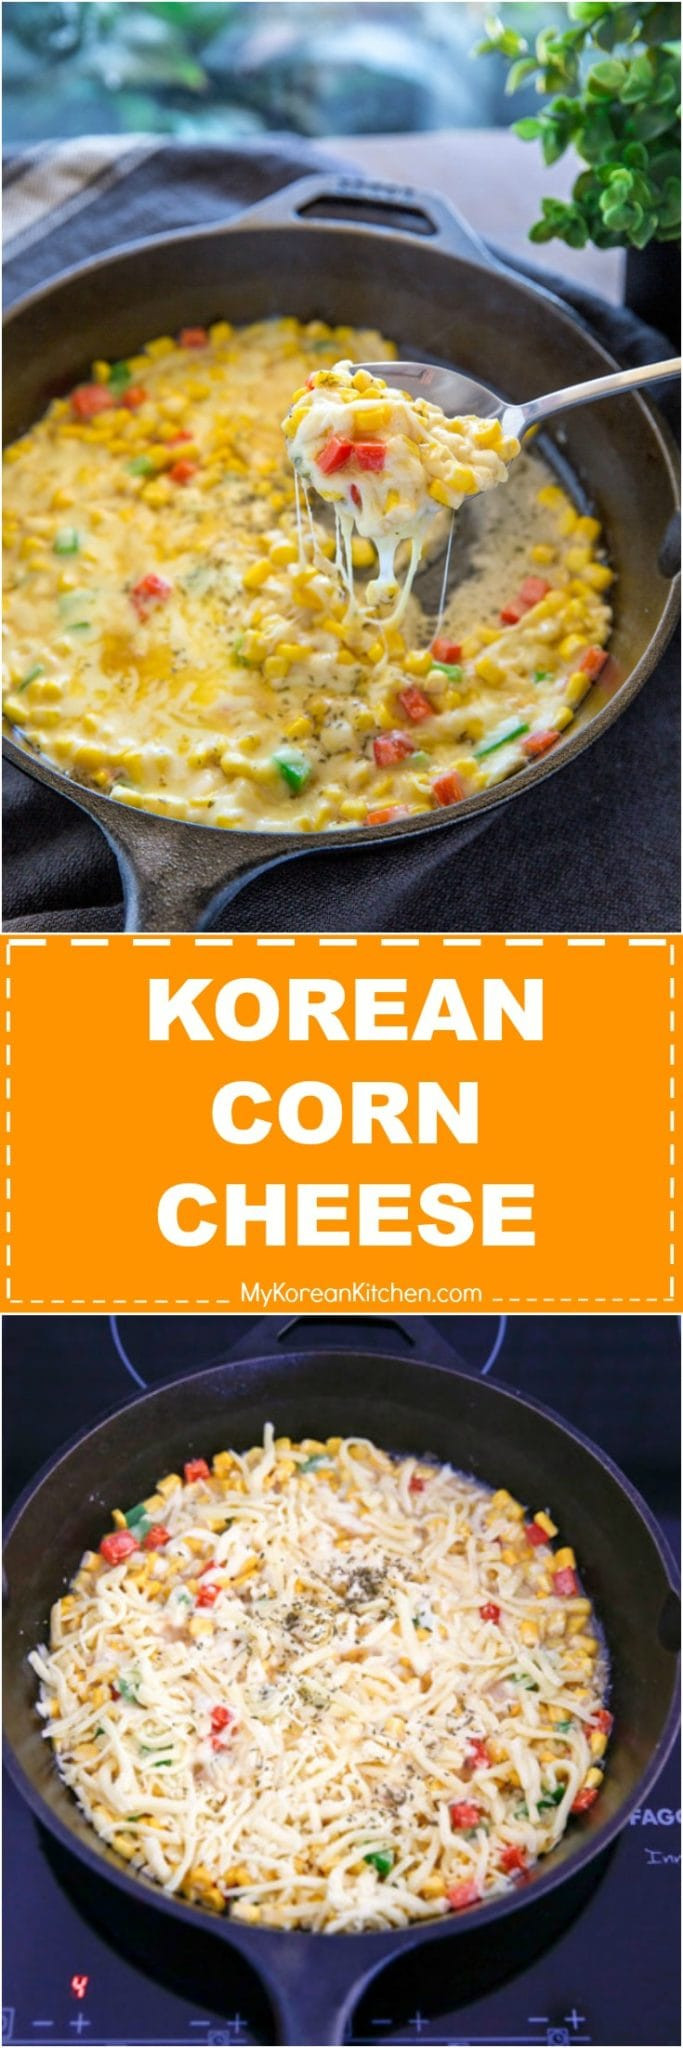 Korean Cheese Corn
 Corn Cheese My Korean Kitchen